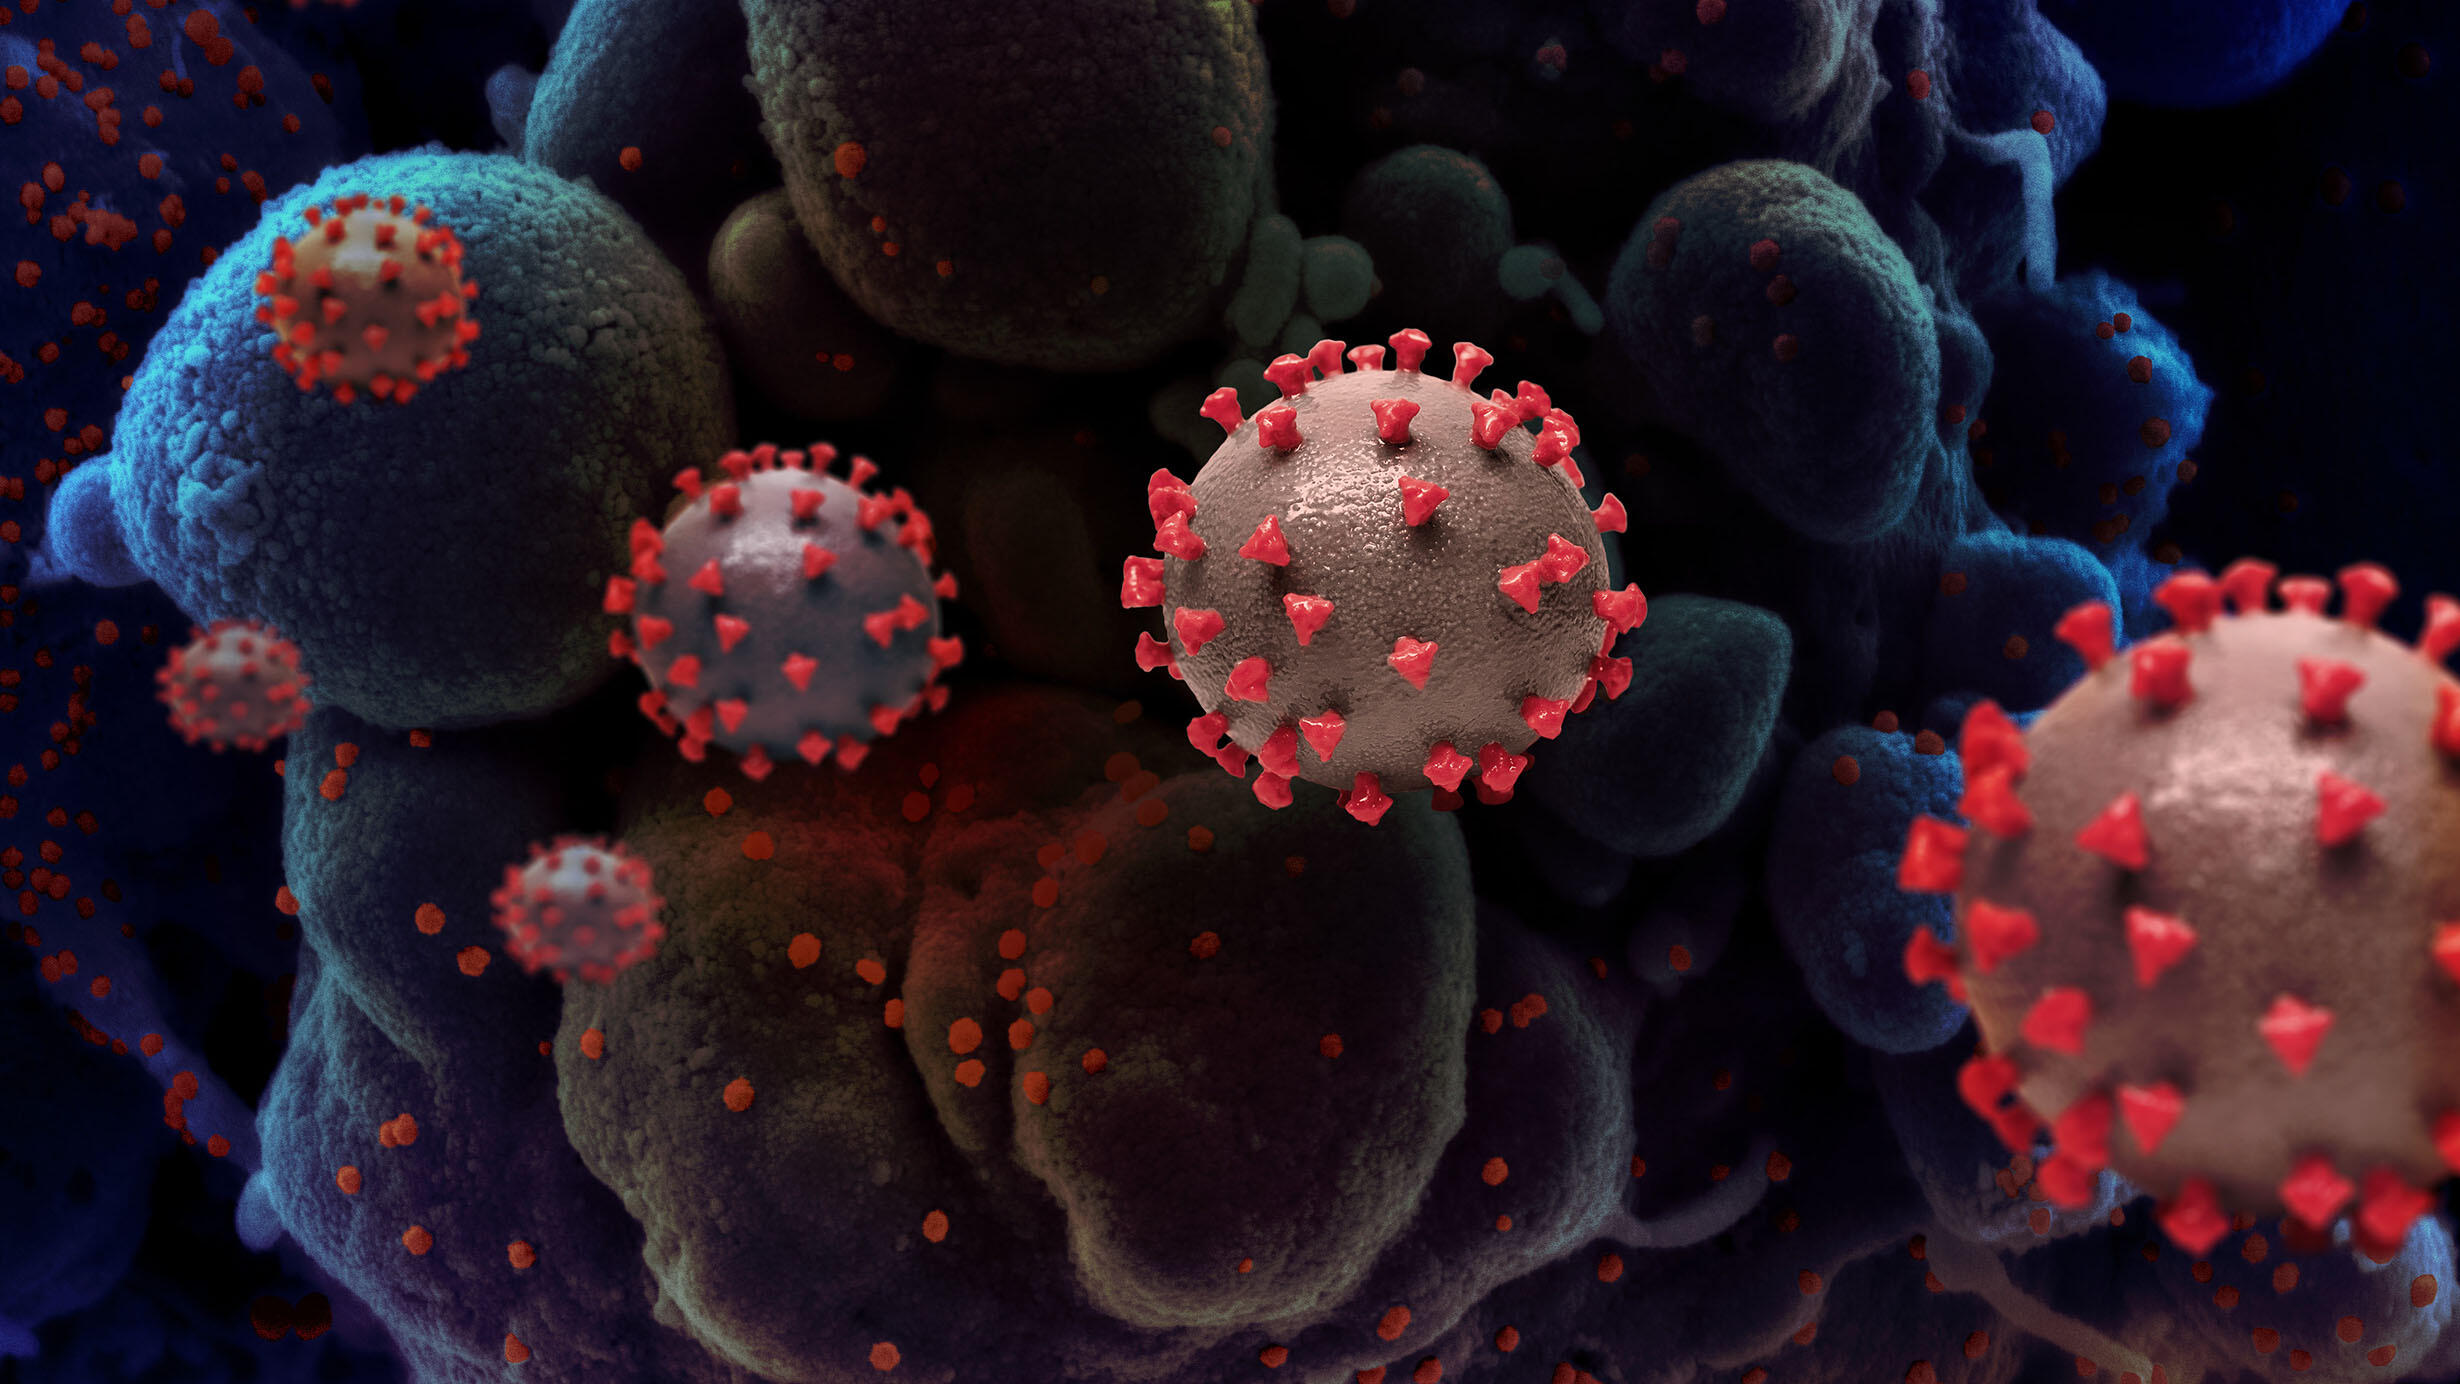 Artist rendering of SARS-COV-2 virus particles.